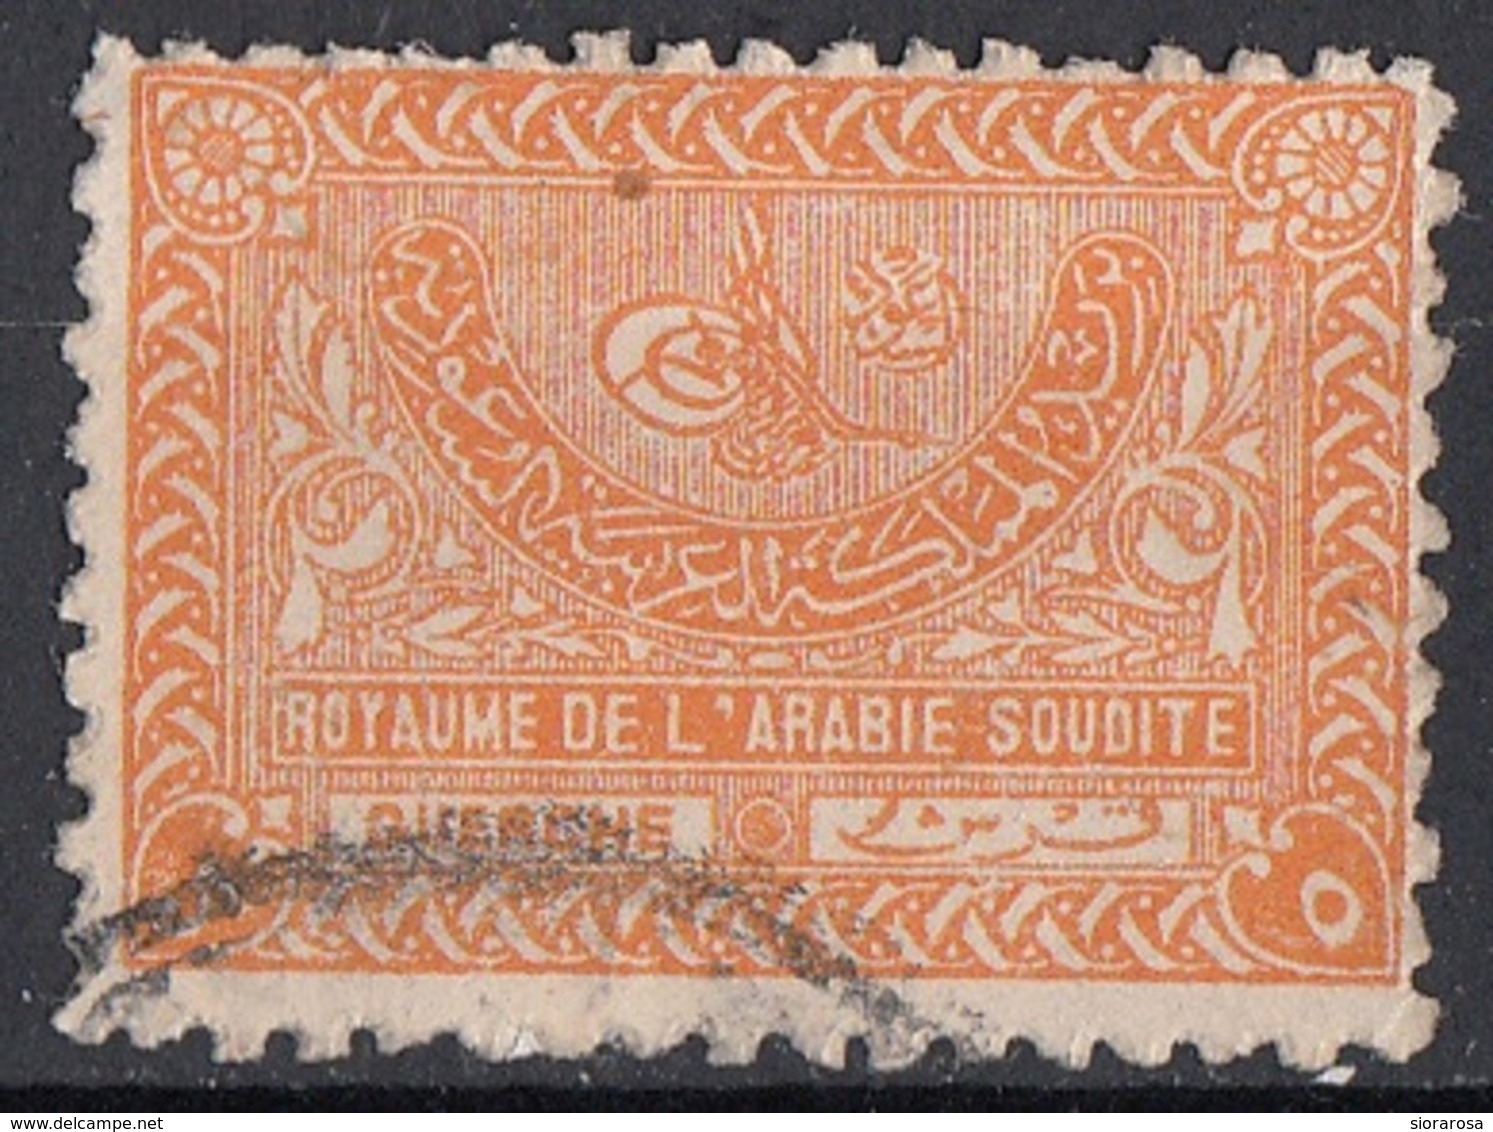 Arabia Saudita 1934 Sc. 168 Tughra Of King Abdul Aziz Used - Arabia Saudita